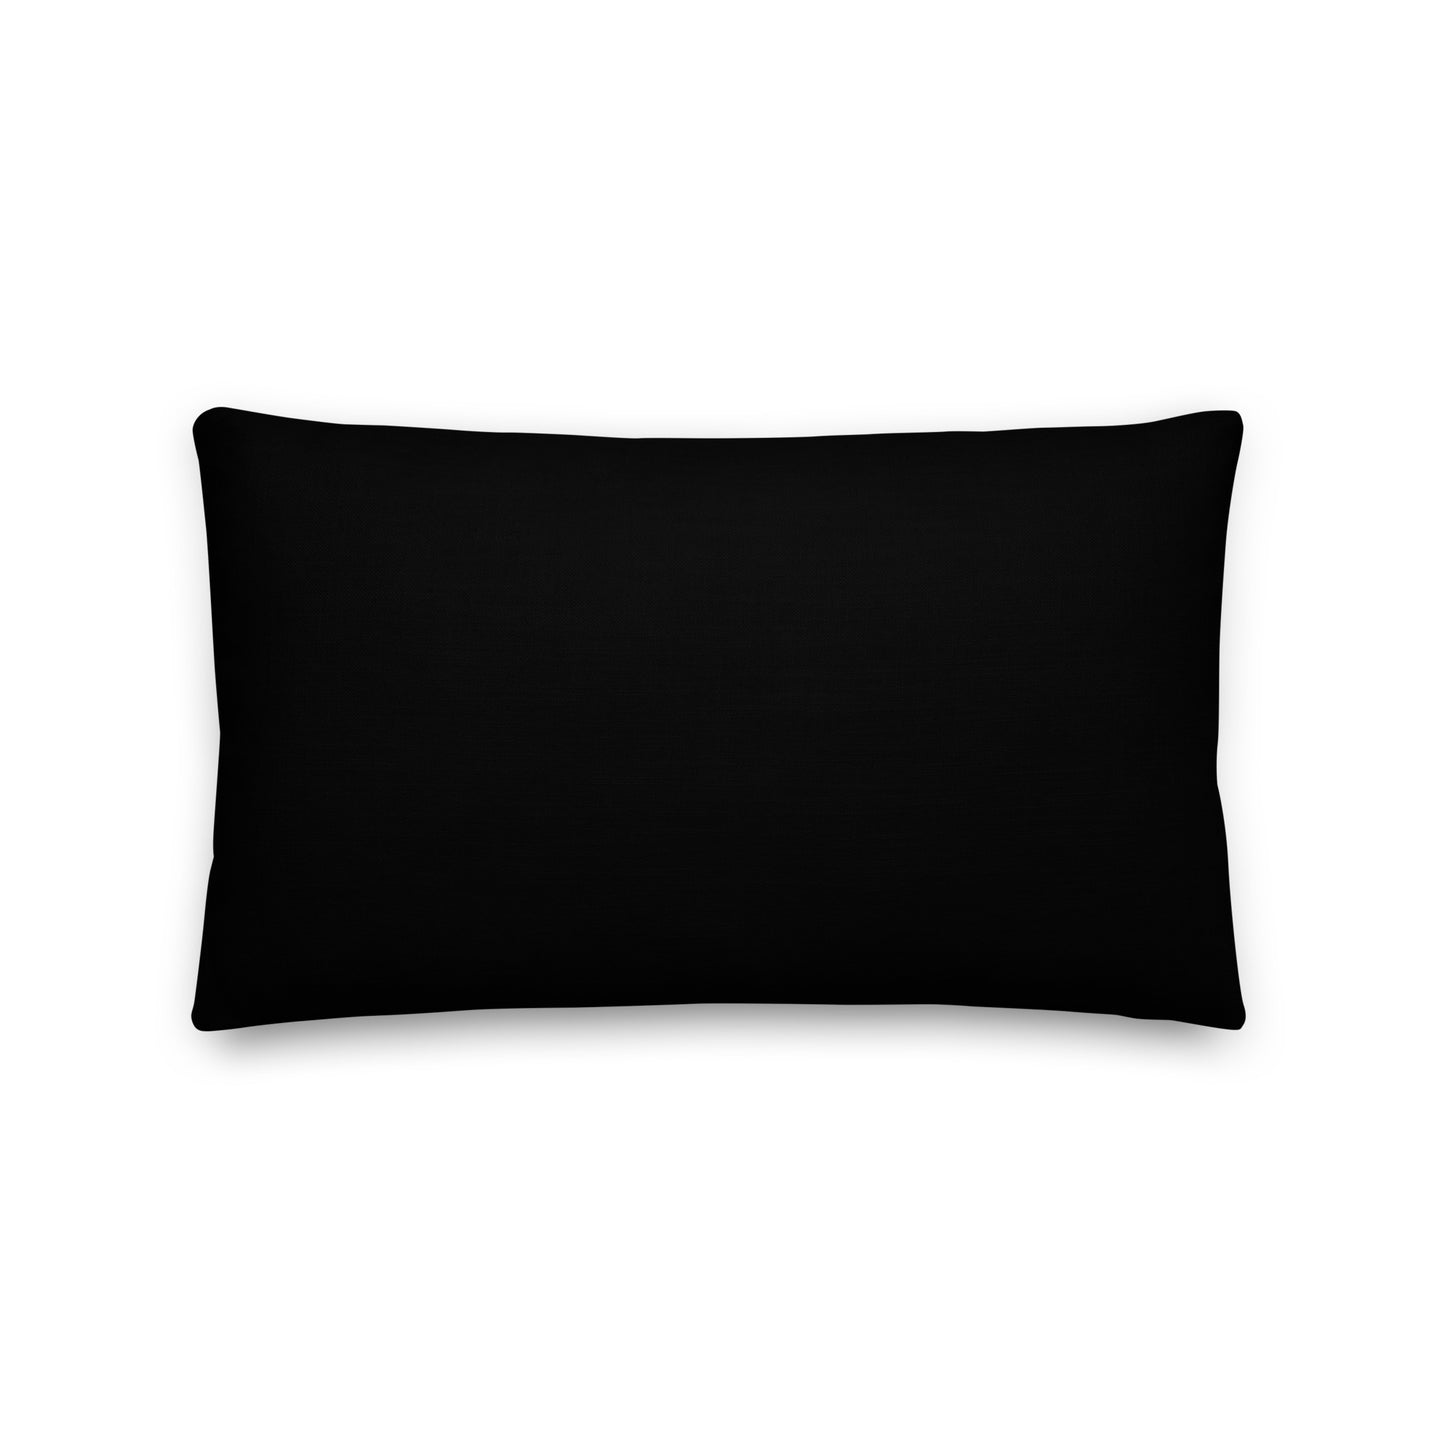 GOT7 Mark, Mark Tuan Waterpaint Portrait Premium Pillow